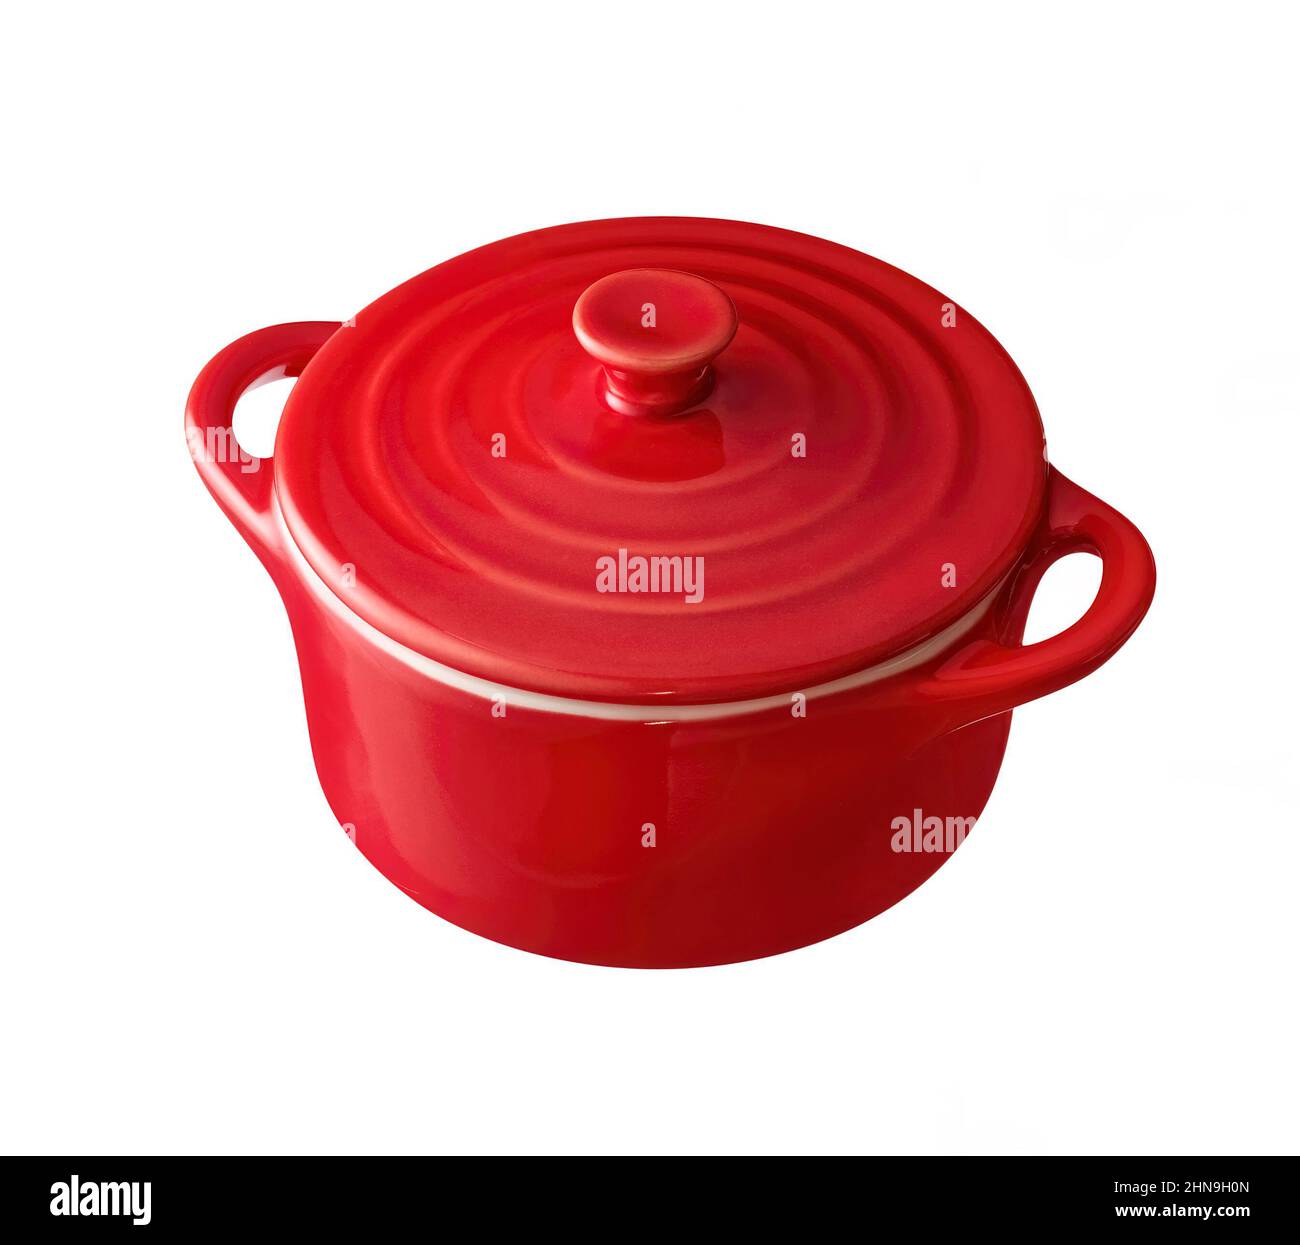 https://c8.alamy.com/comp/2HN9H0N/red-cast-iron-enamel-frying-pan-dutch-oven-isolated-on-white-2HN9H0N.jpg